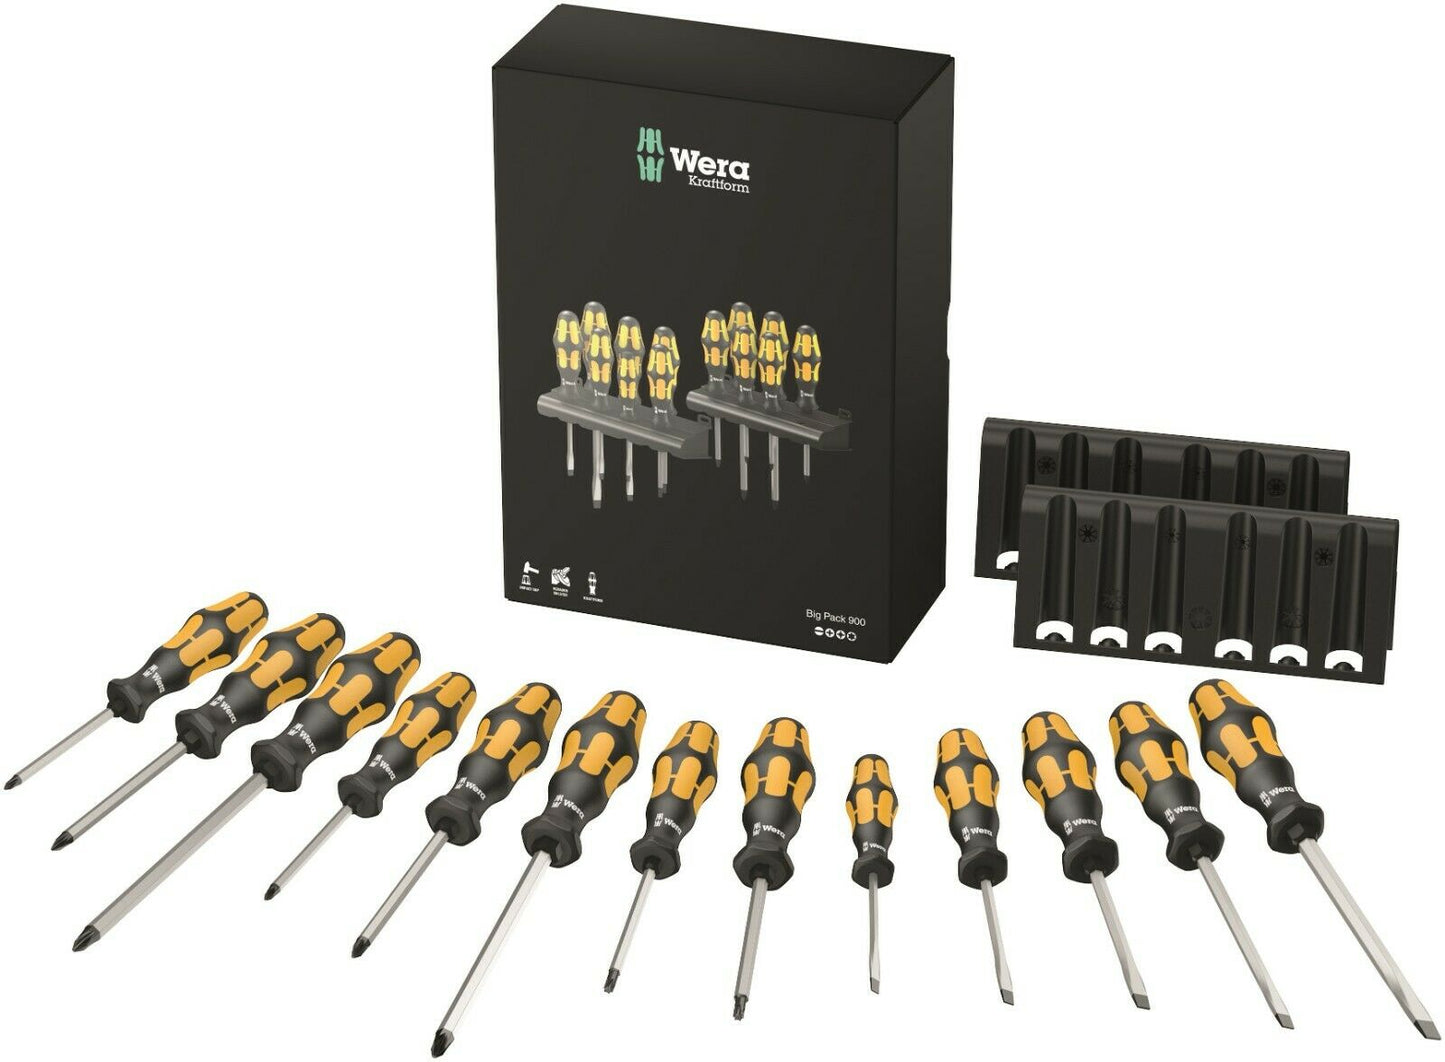 wera kraftform big pack 900 chiseldriver screwdriver set 15 pieces 05133285001